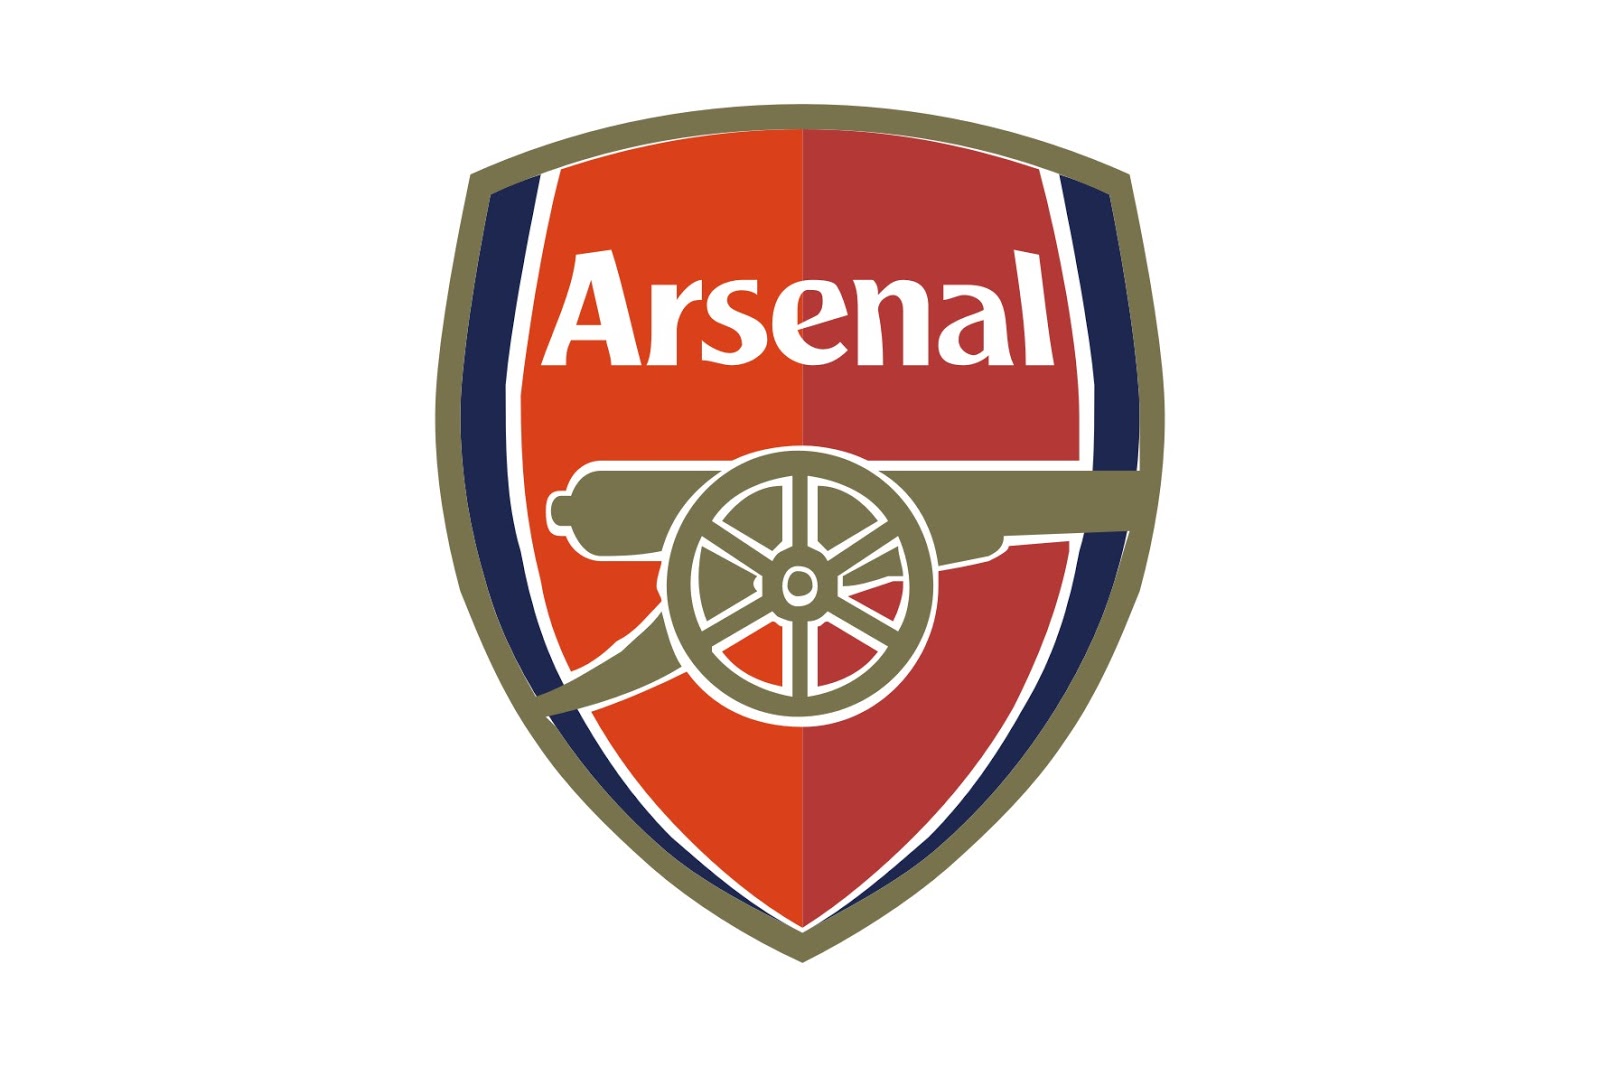 Arsenal Logos Full HD Pictures